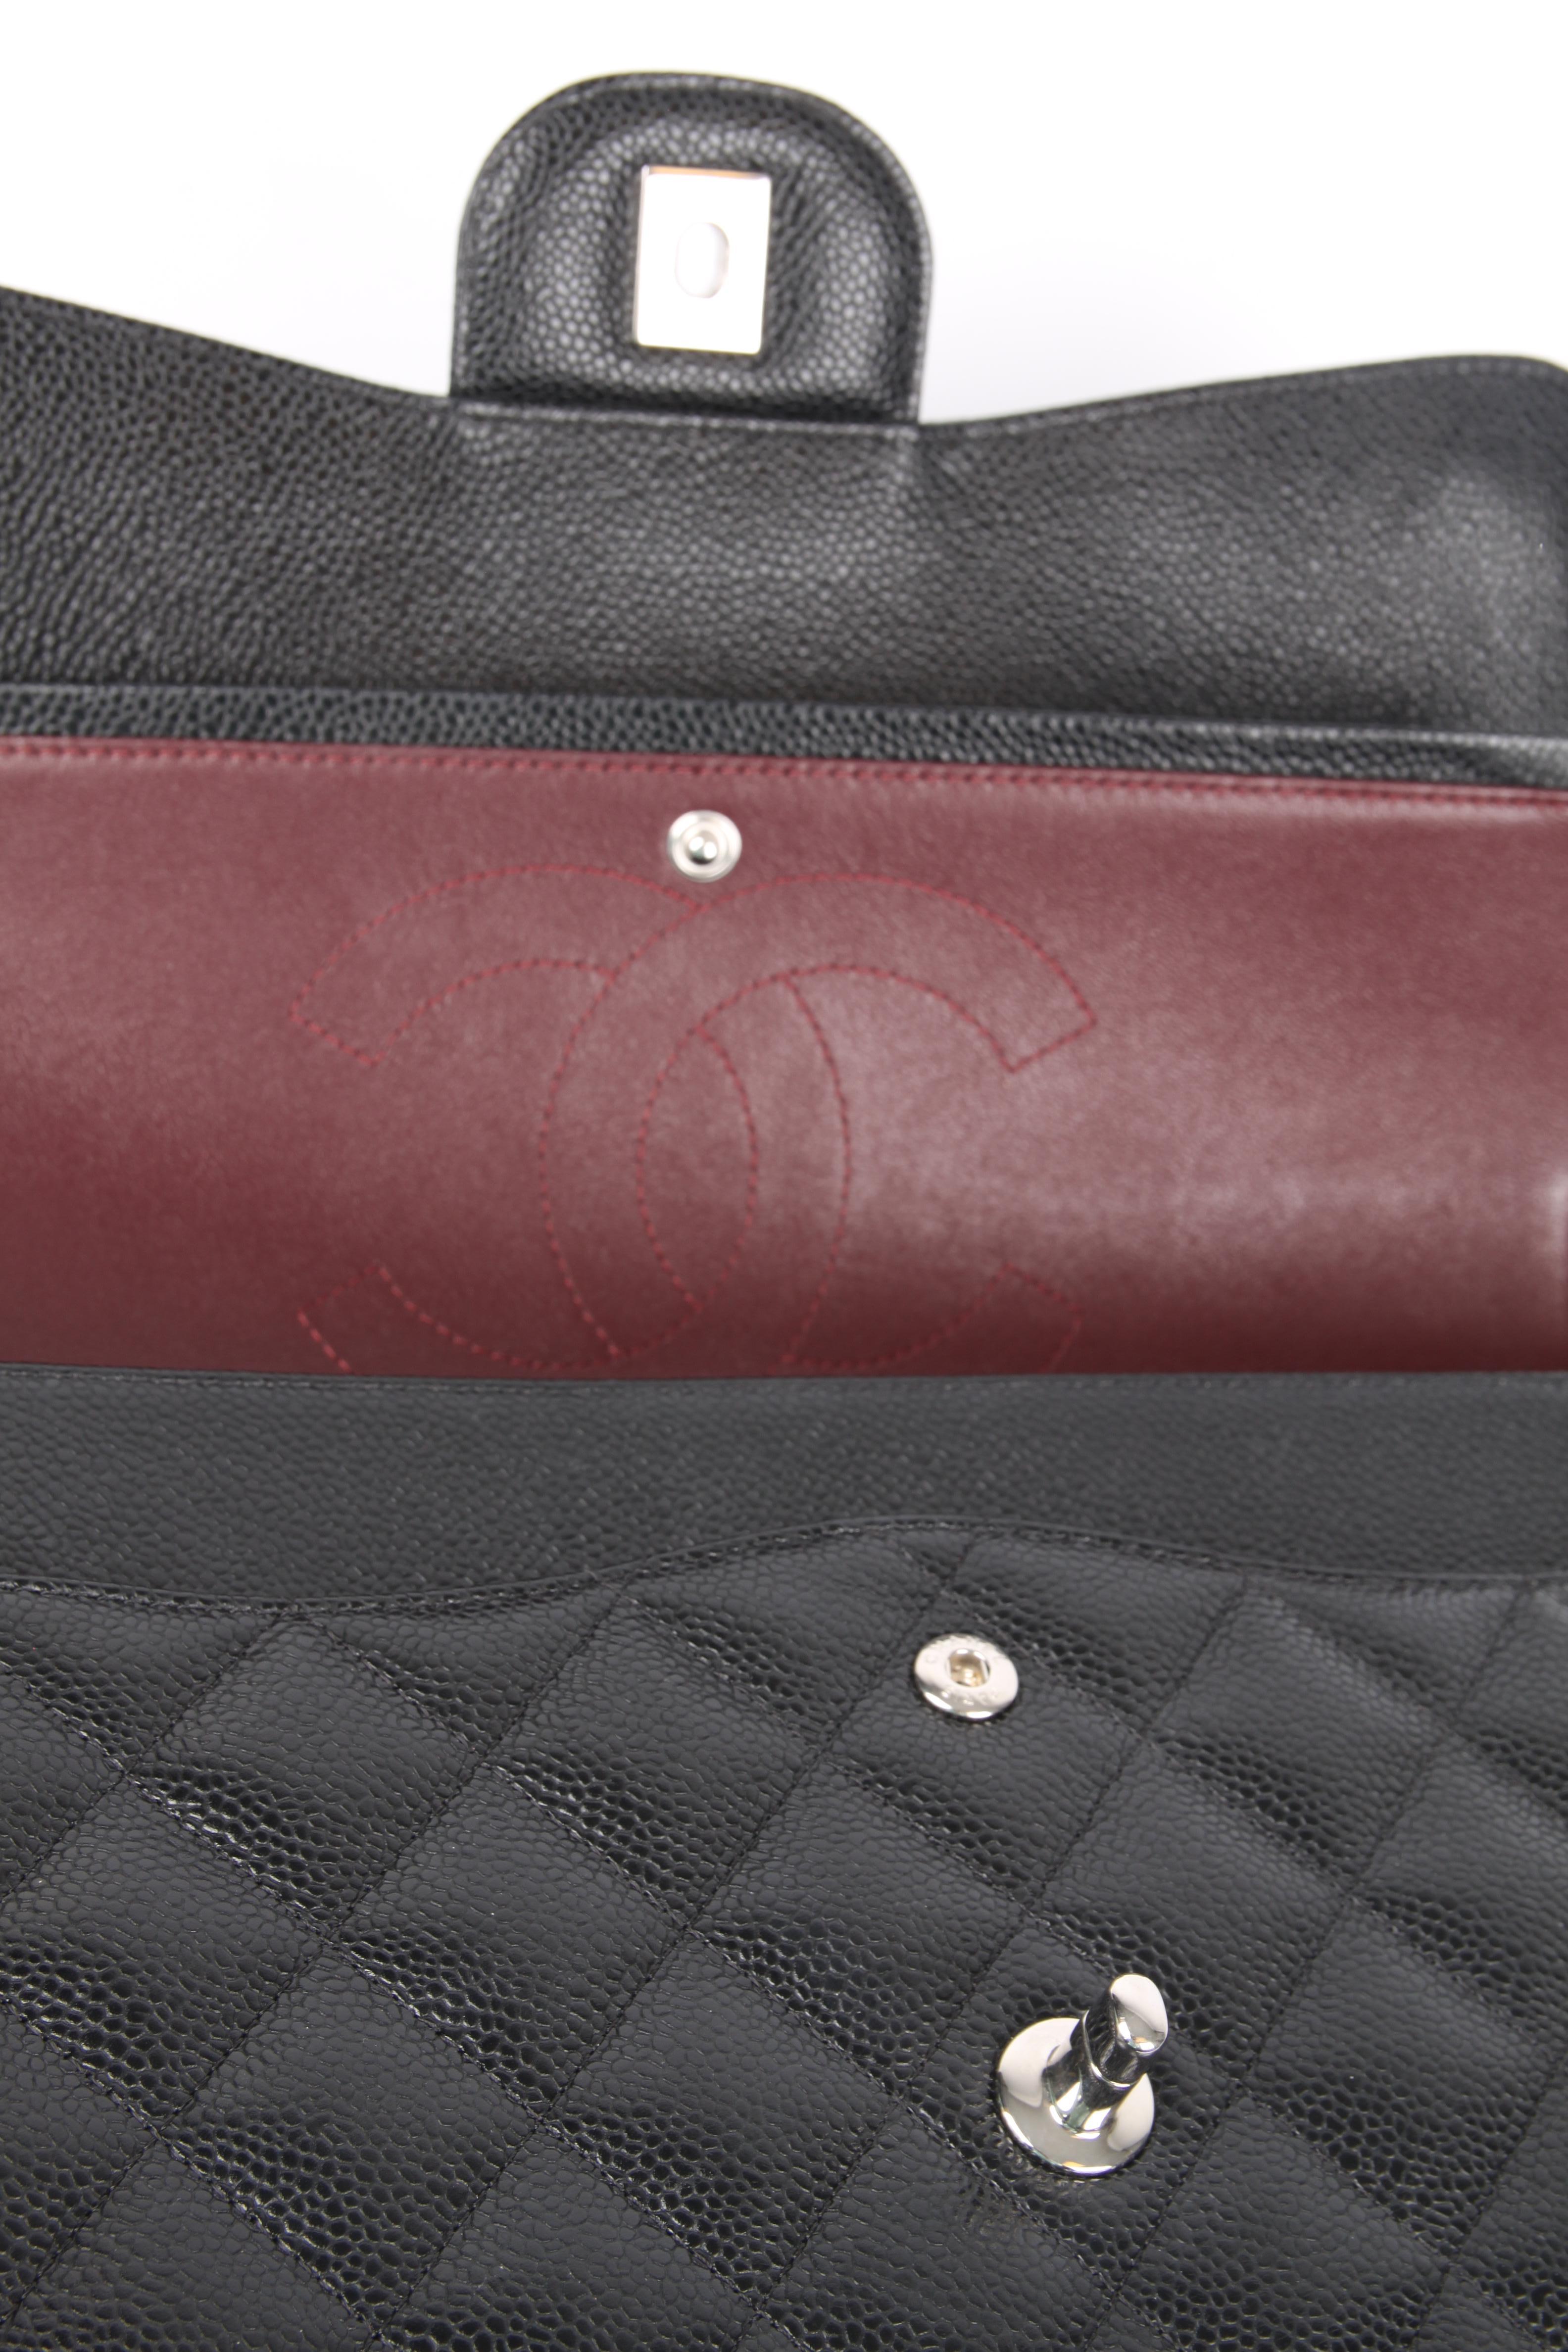 Chanel 2.55 Timeless Jumbo Double Flap Bag - black caviar leather/silver 4